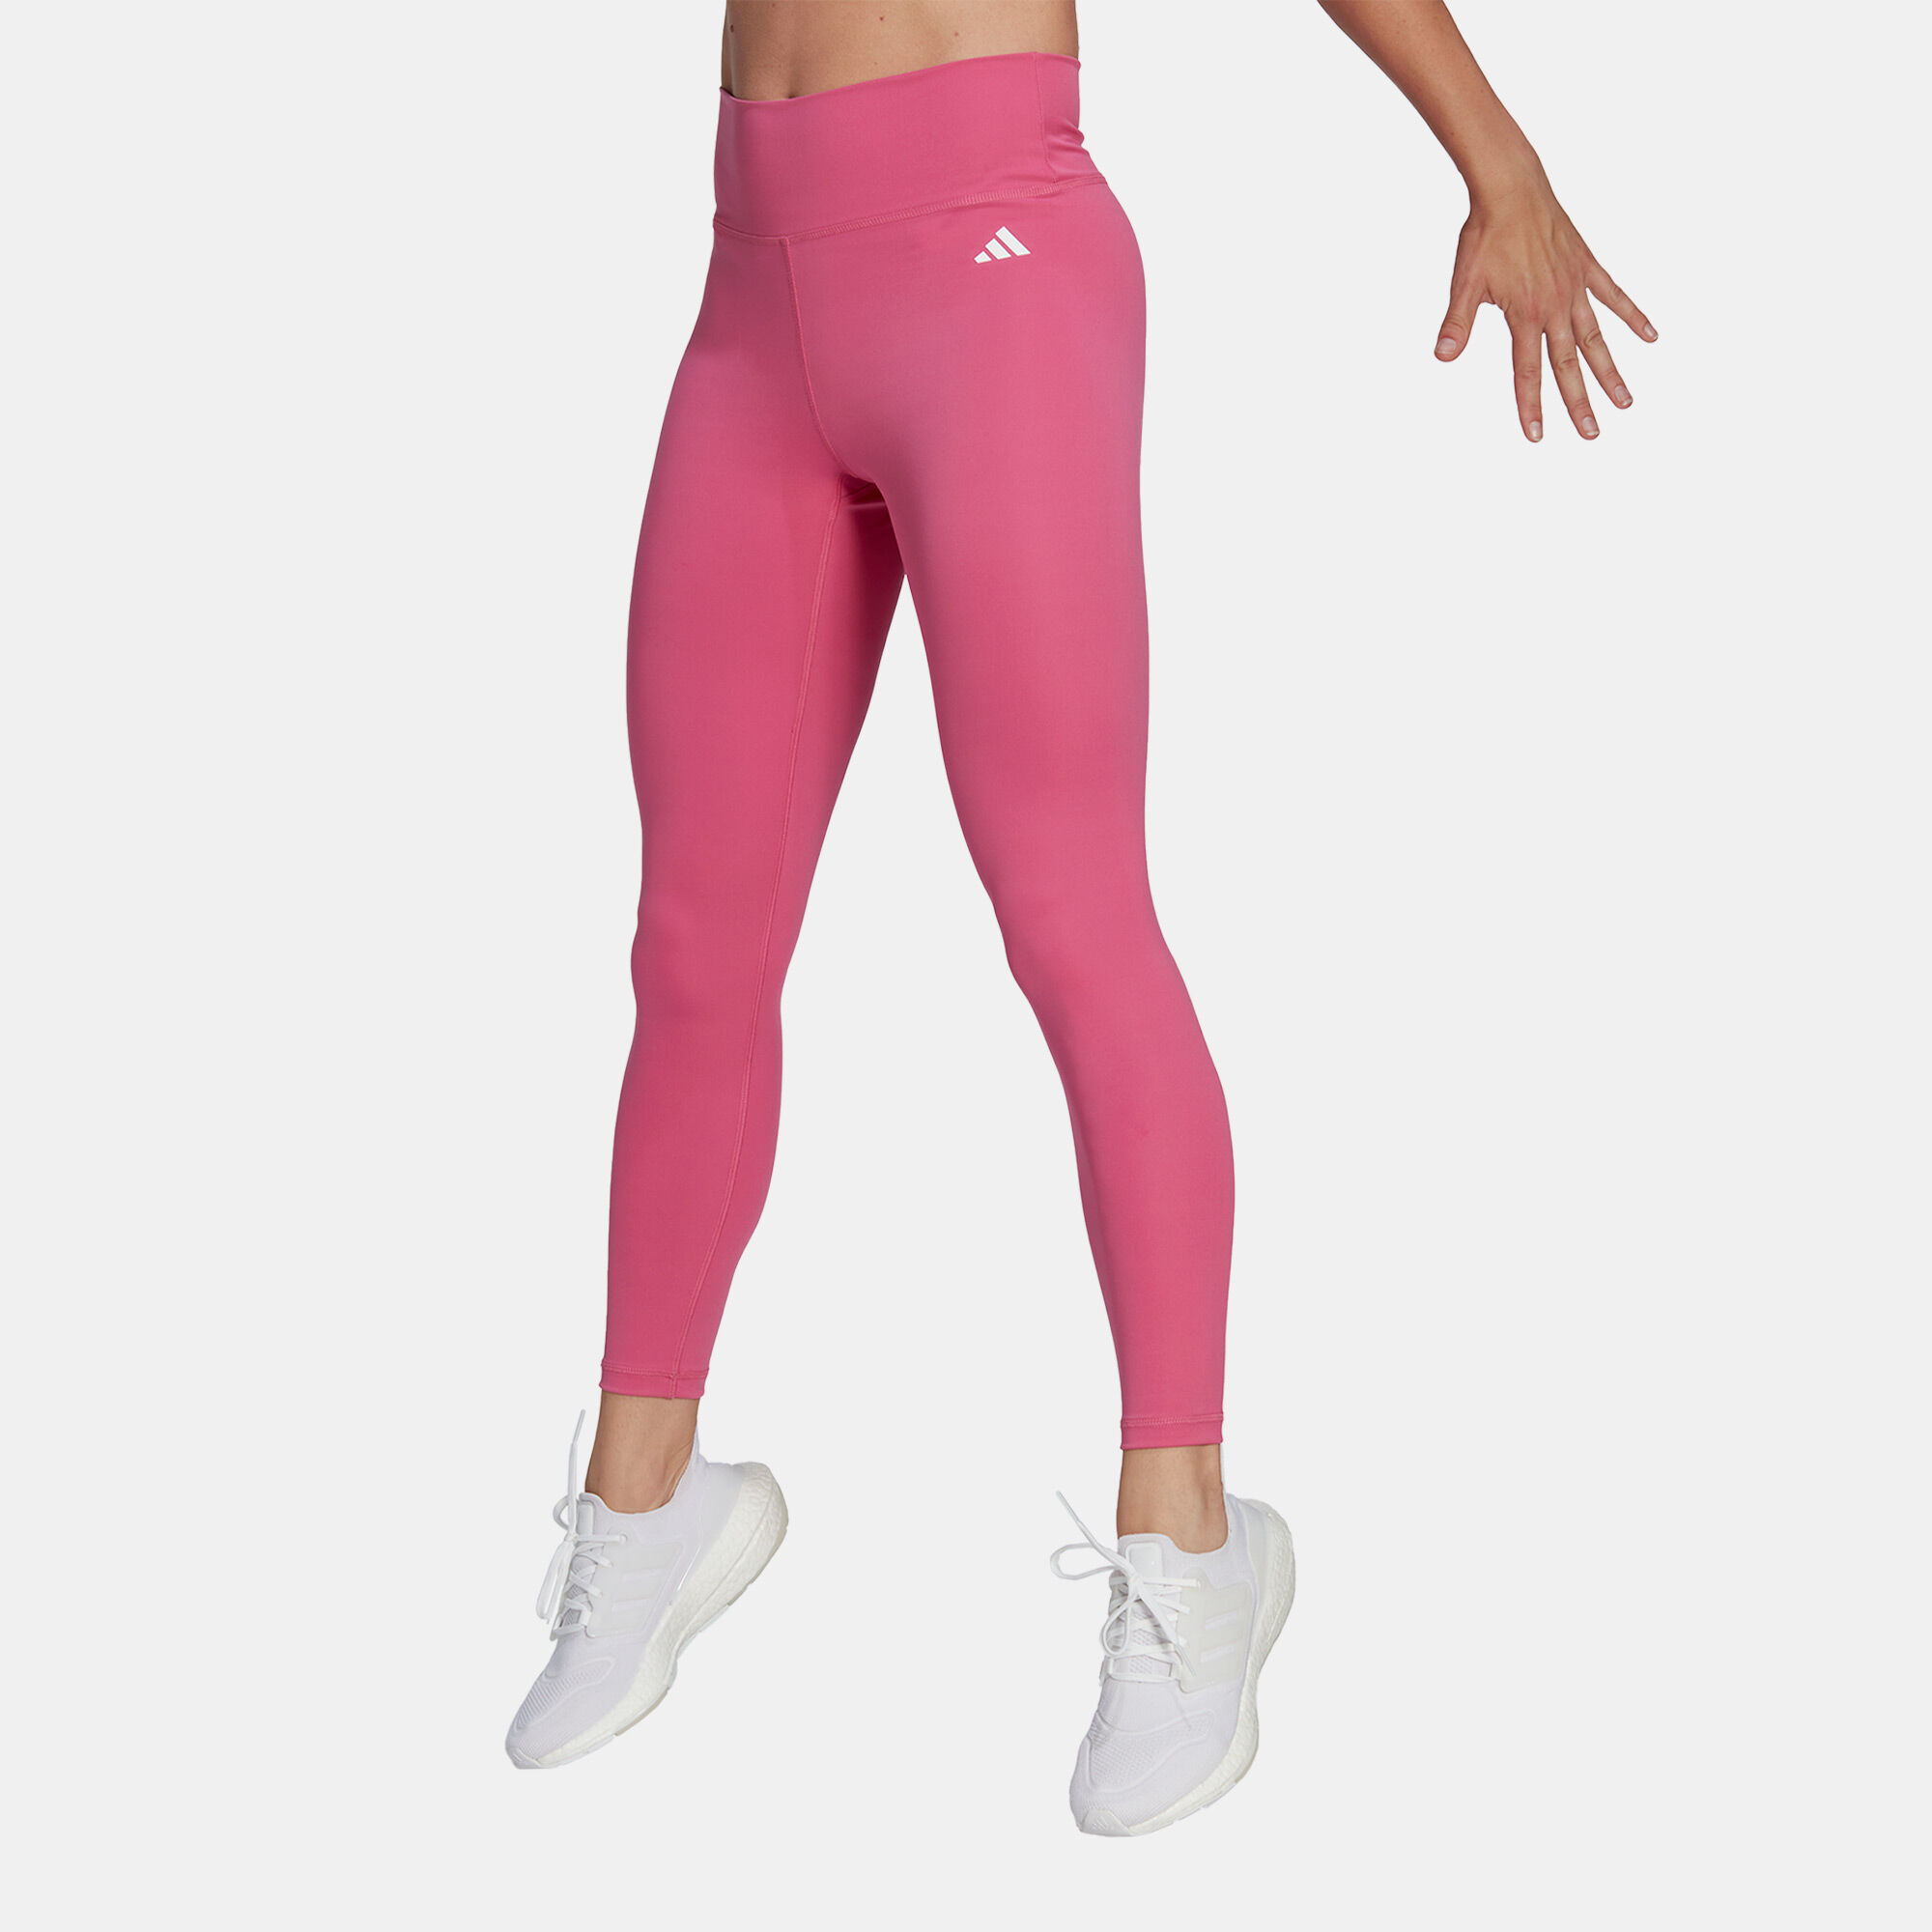 Adidas Girls Kids Performance Logo Leggings pants NWT | eBay